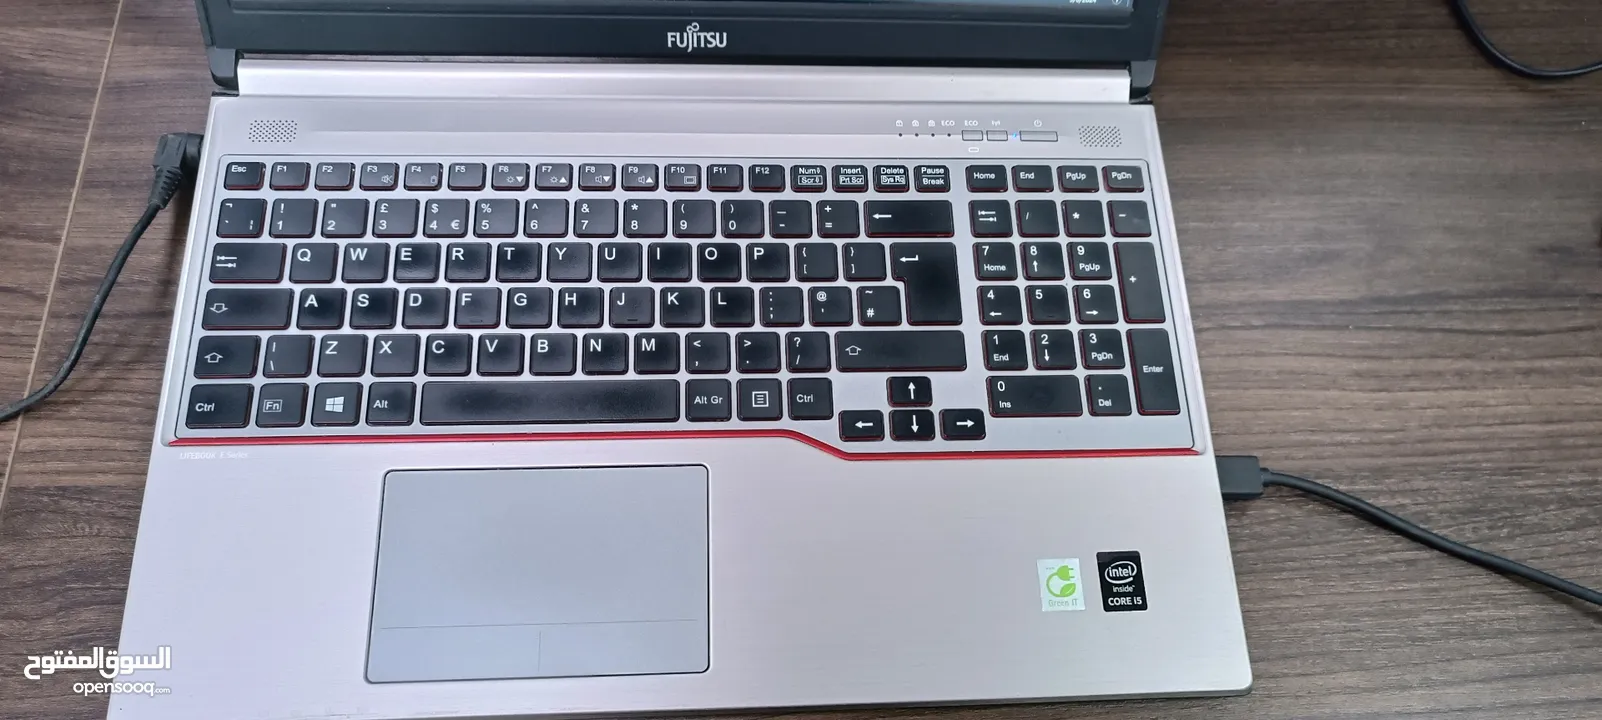 Fujitsu core i5 Laptop